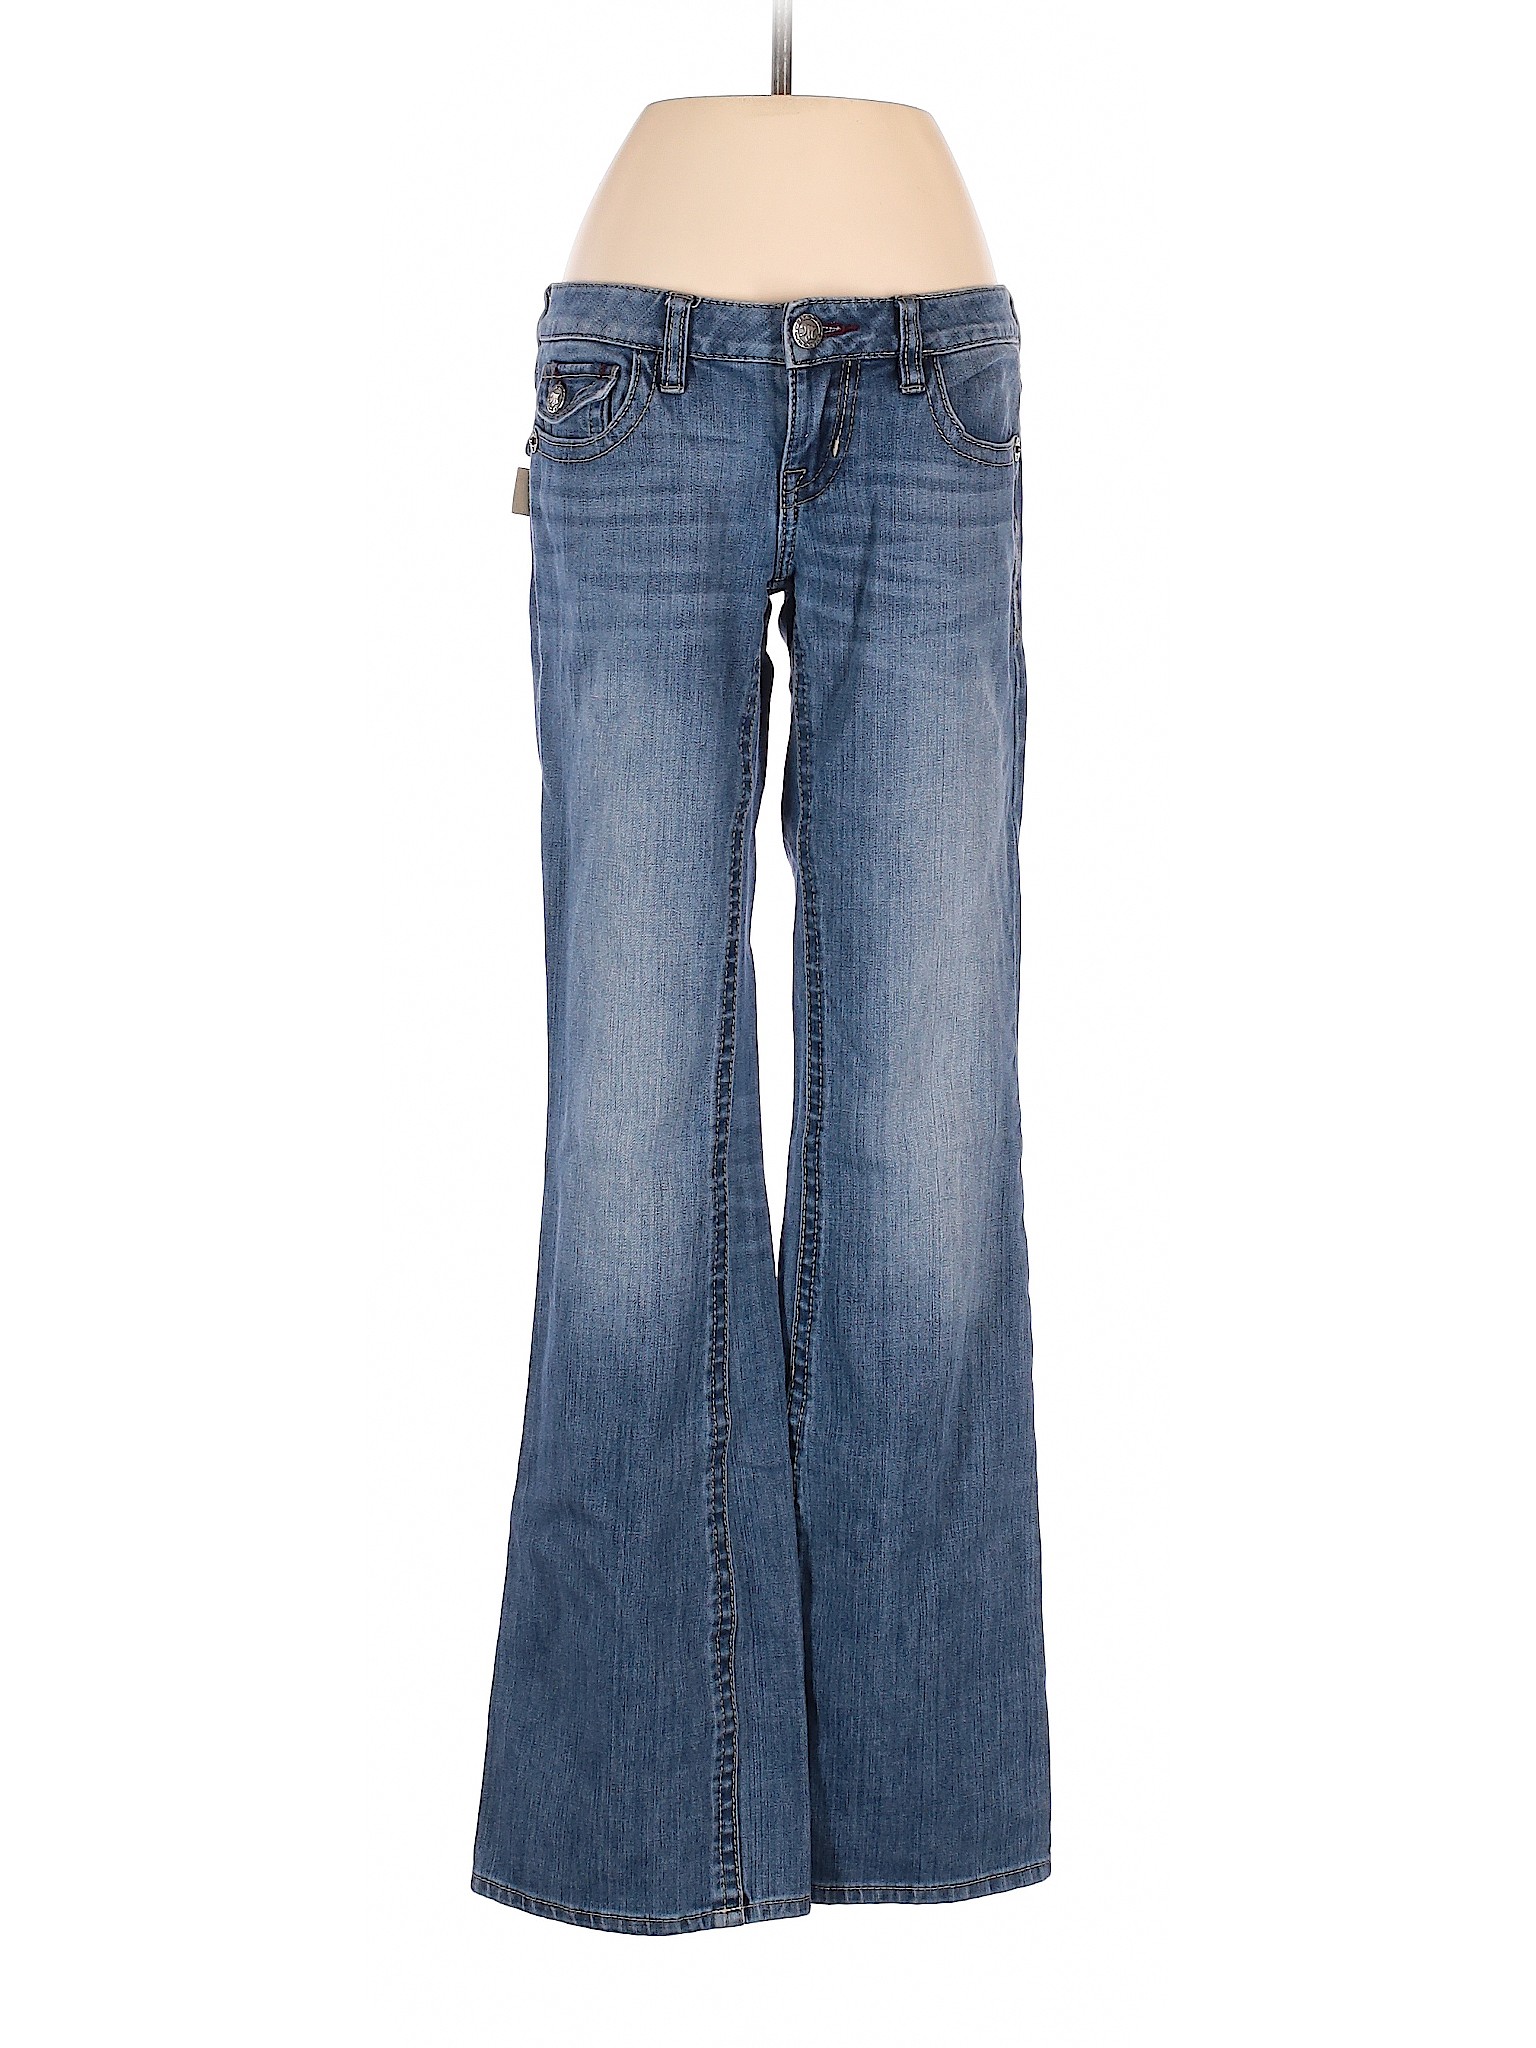 Mek Denim USA Women Blue Jeans 26W | eBay